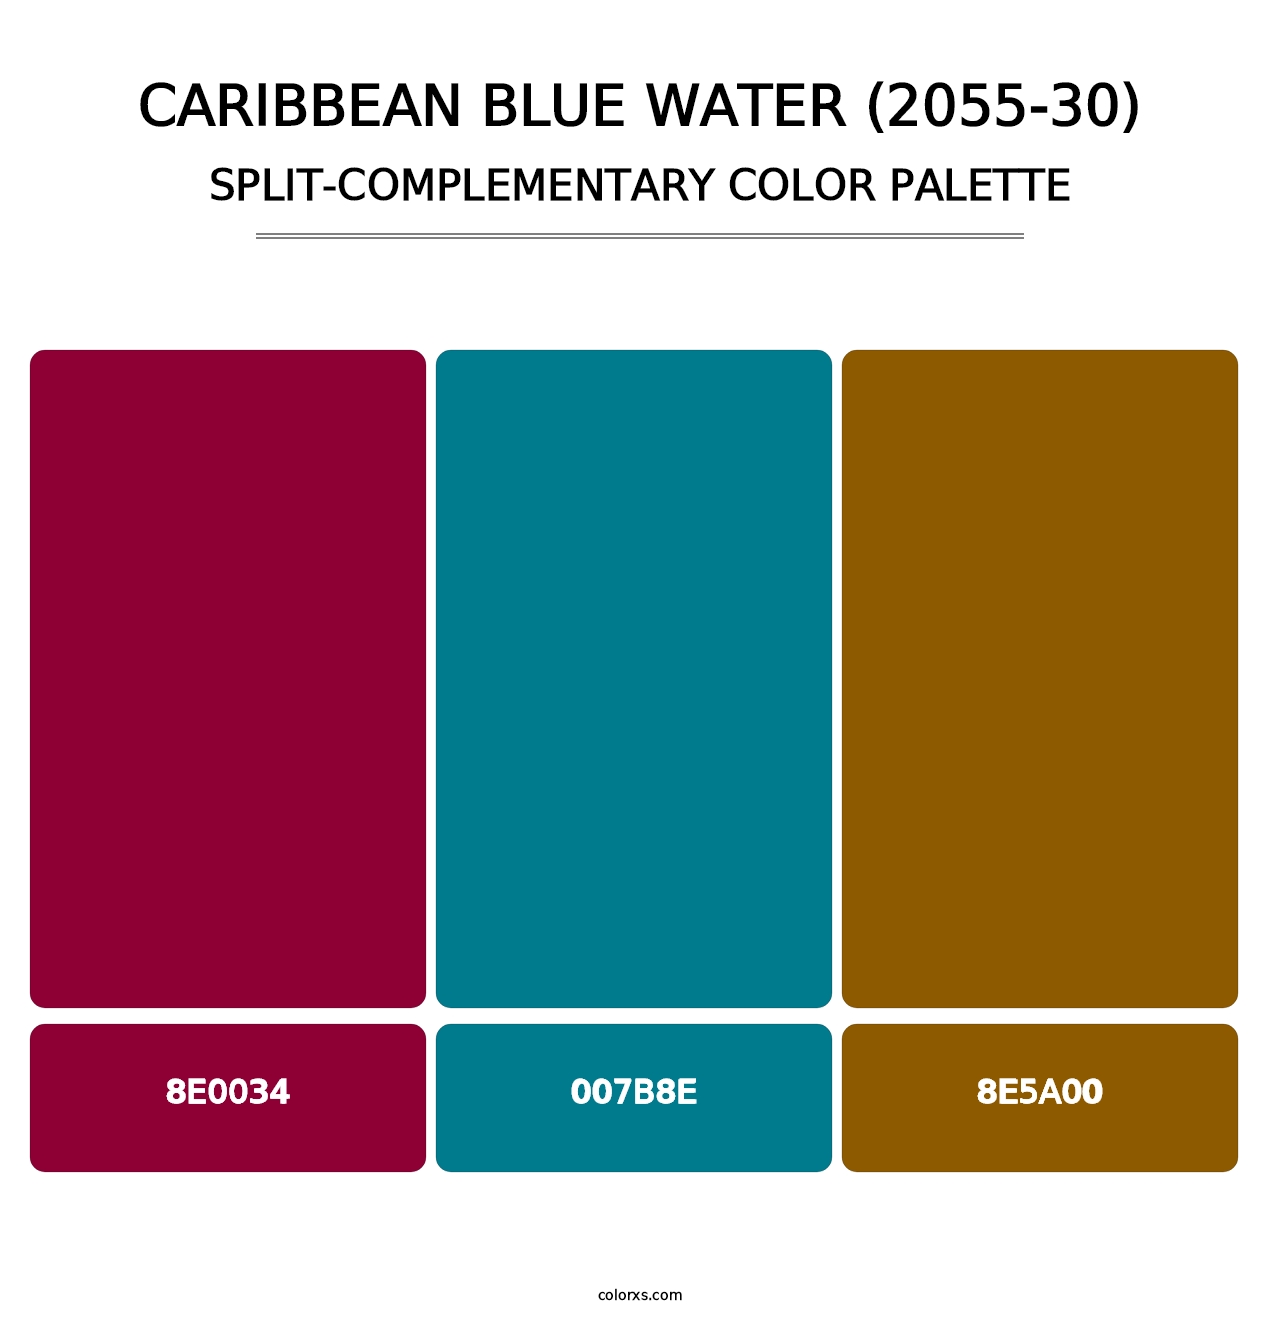 Caribbean Blue Water (2055-30) - Split-Complementary Color Palette